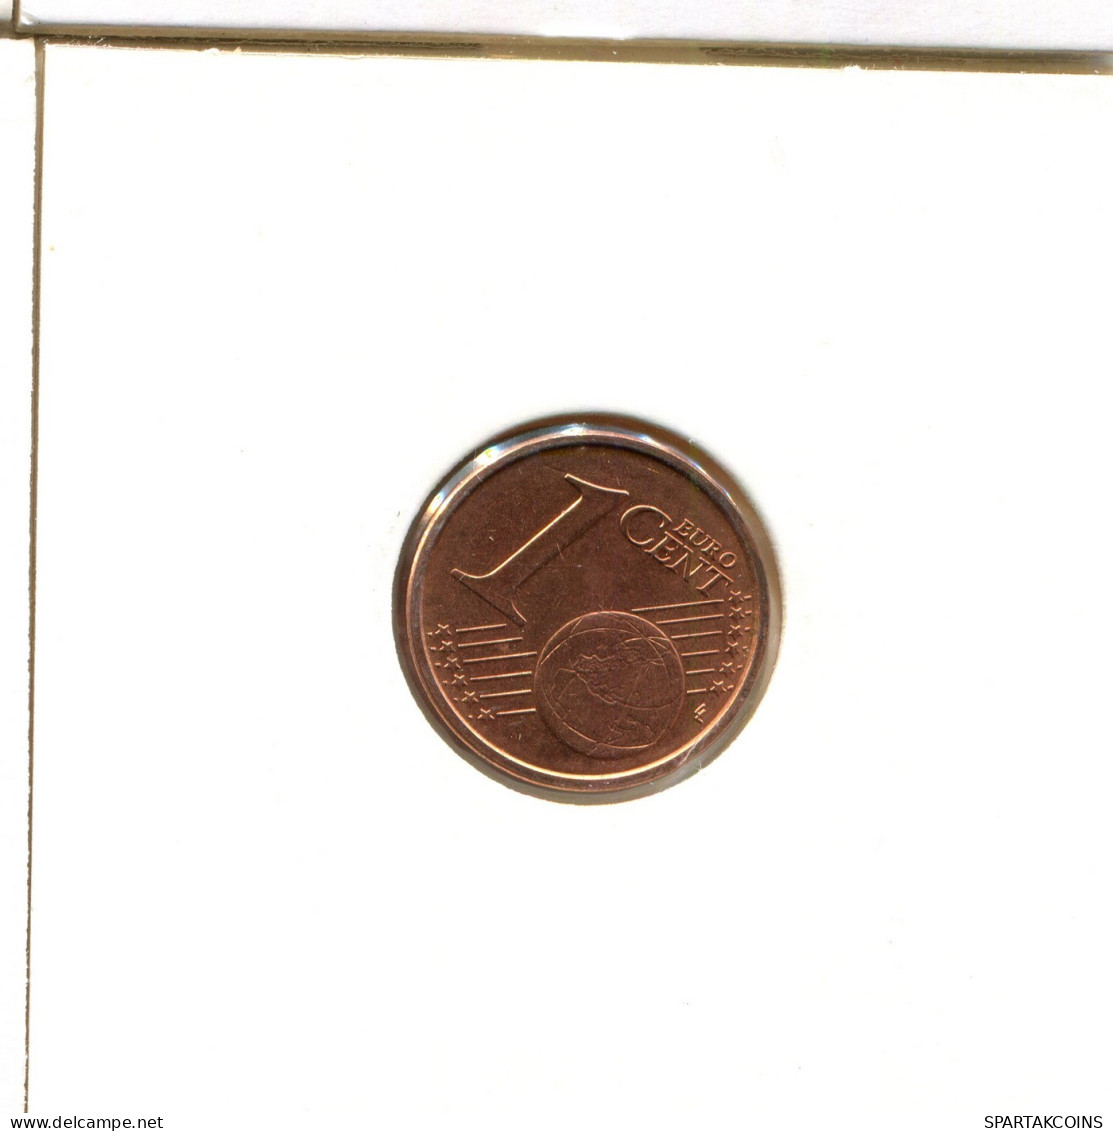 1 EURO CENT 2009 ITALIA ITALY Moneda #EU215.E.A - Italy